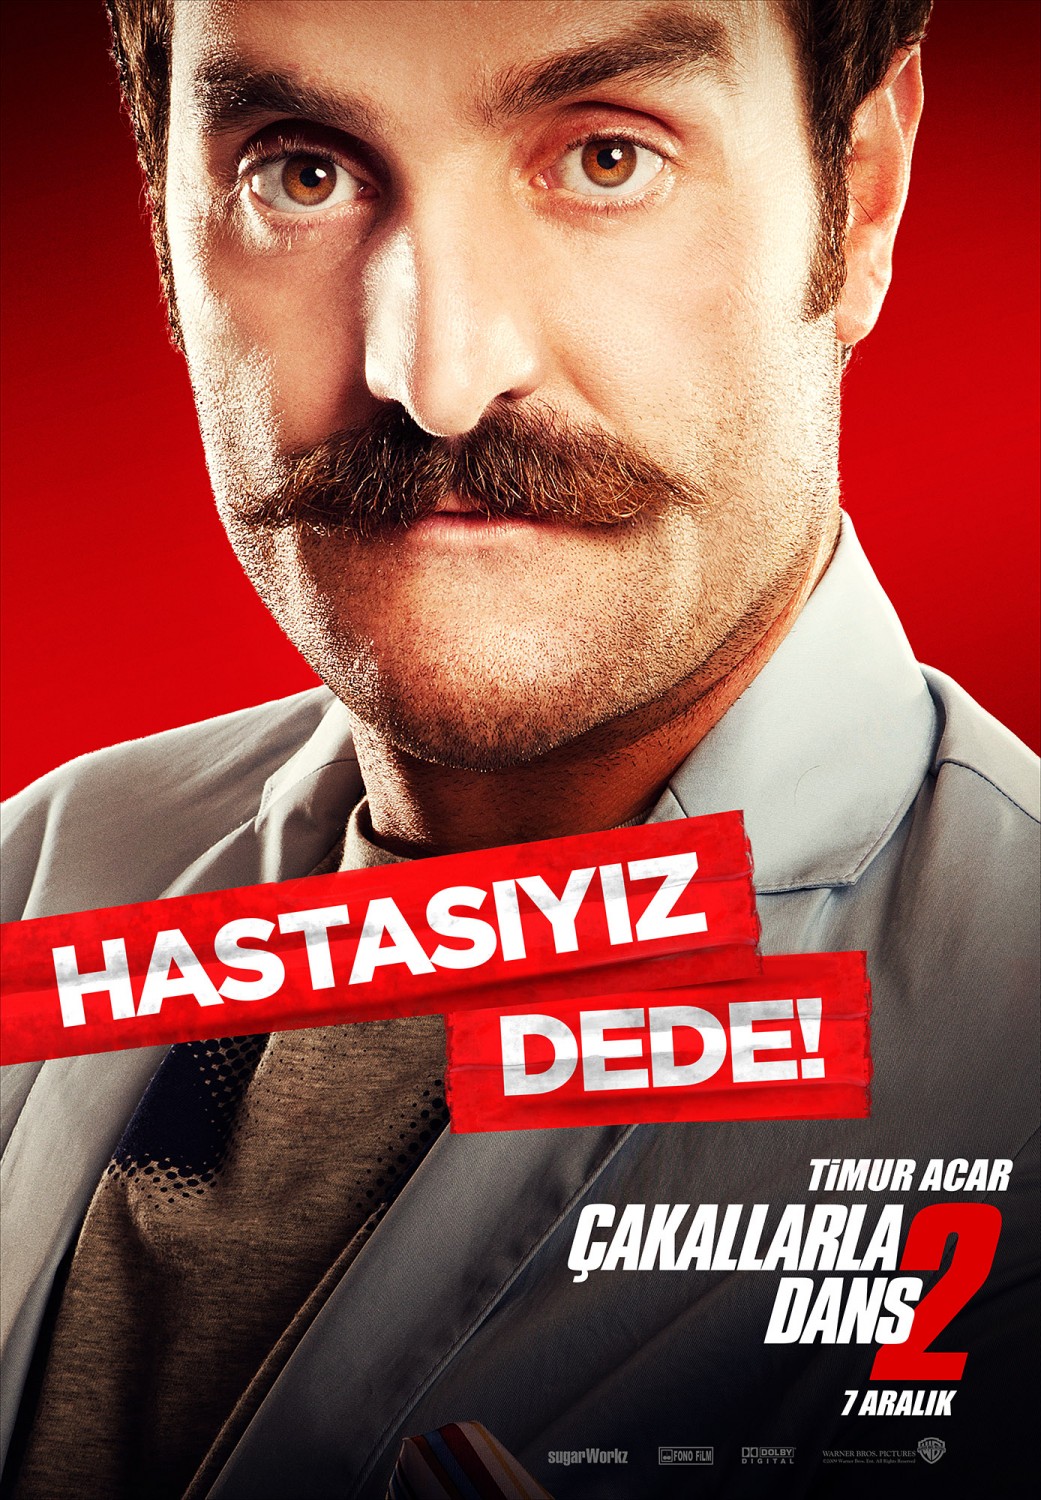 Extra Large Movie Poster Image for Çakallarla dans 2 (#8 of 9)